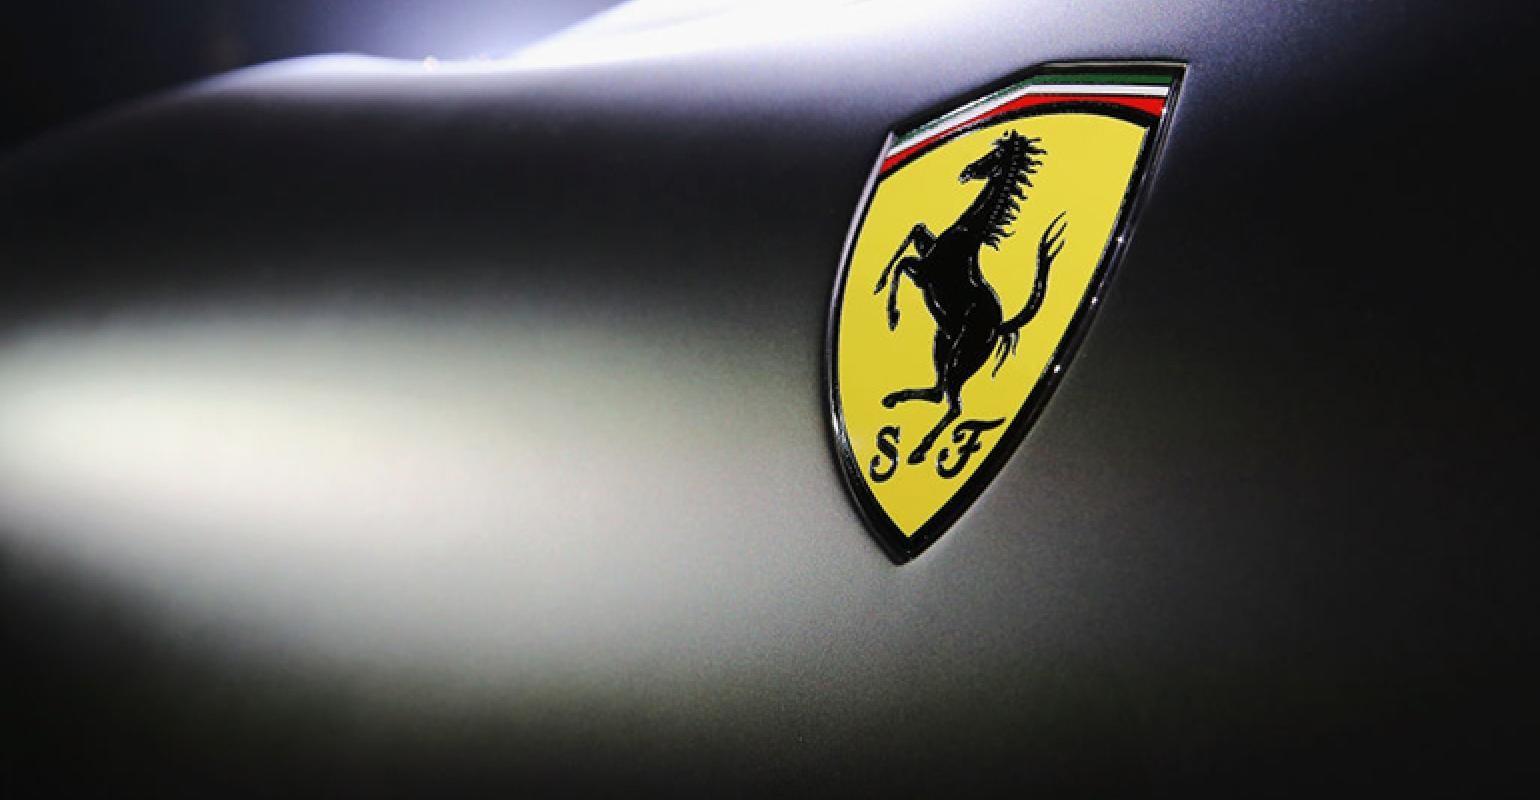 Ferrari Logo - Ferrari Considers Adding Utility Vehicle